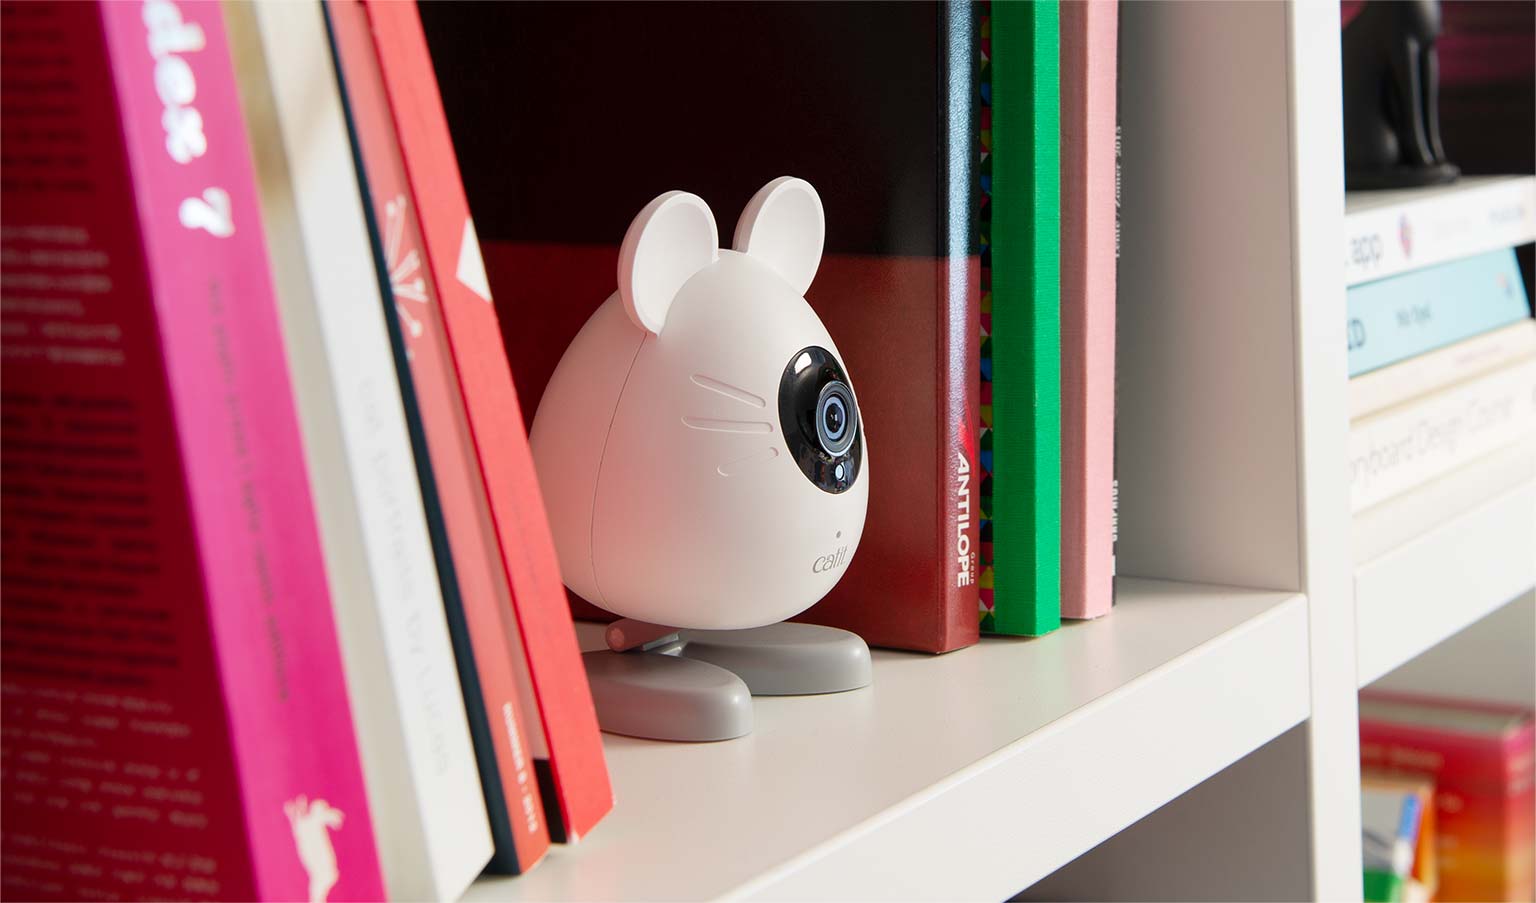 PIXI Smart Mouse camera displayed on bookshelf